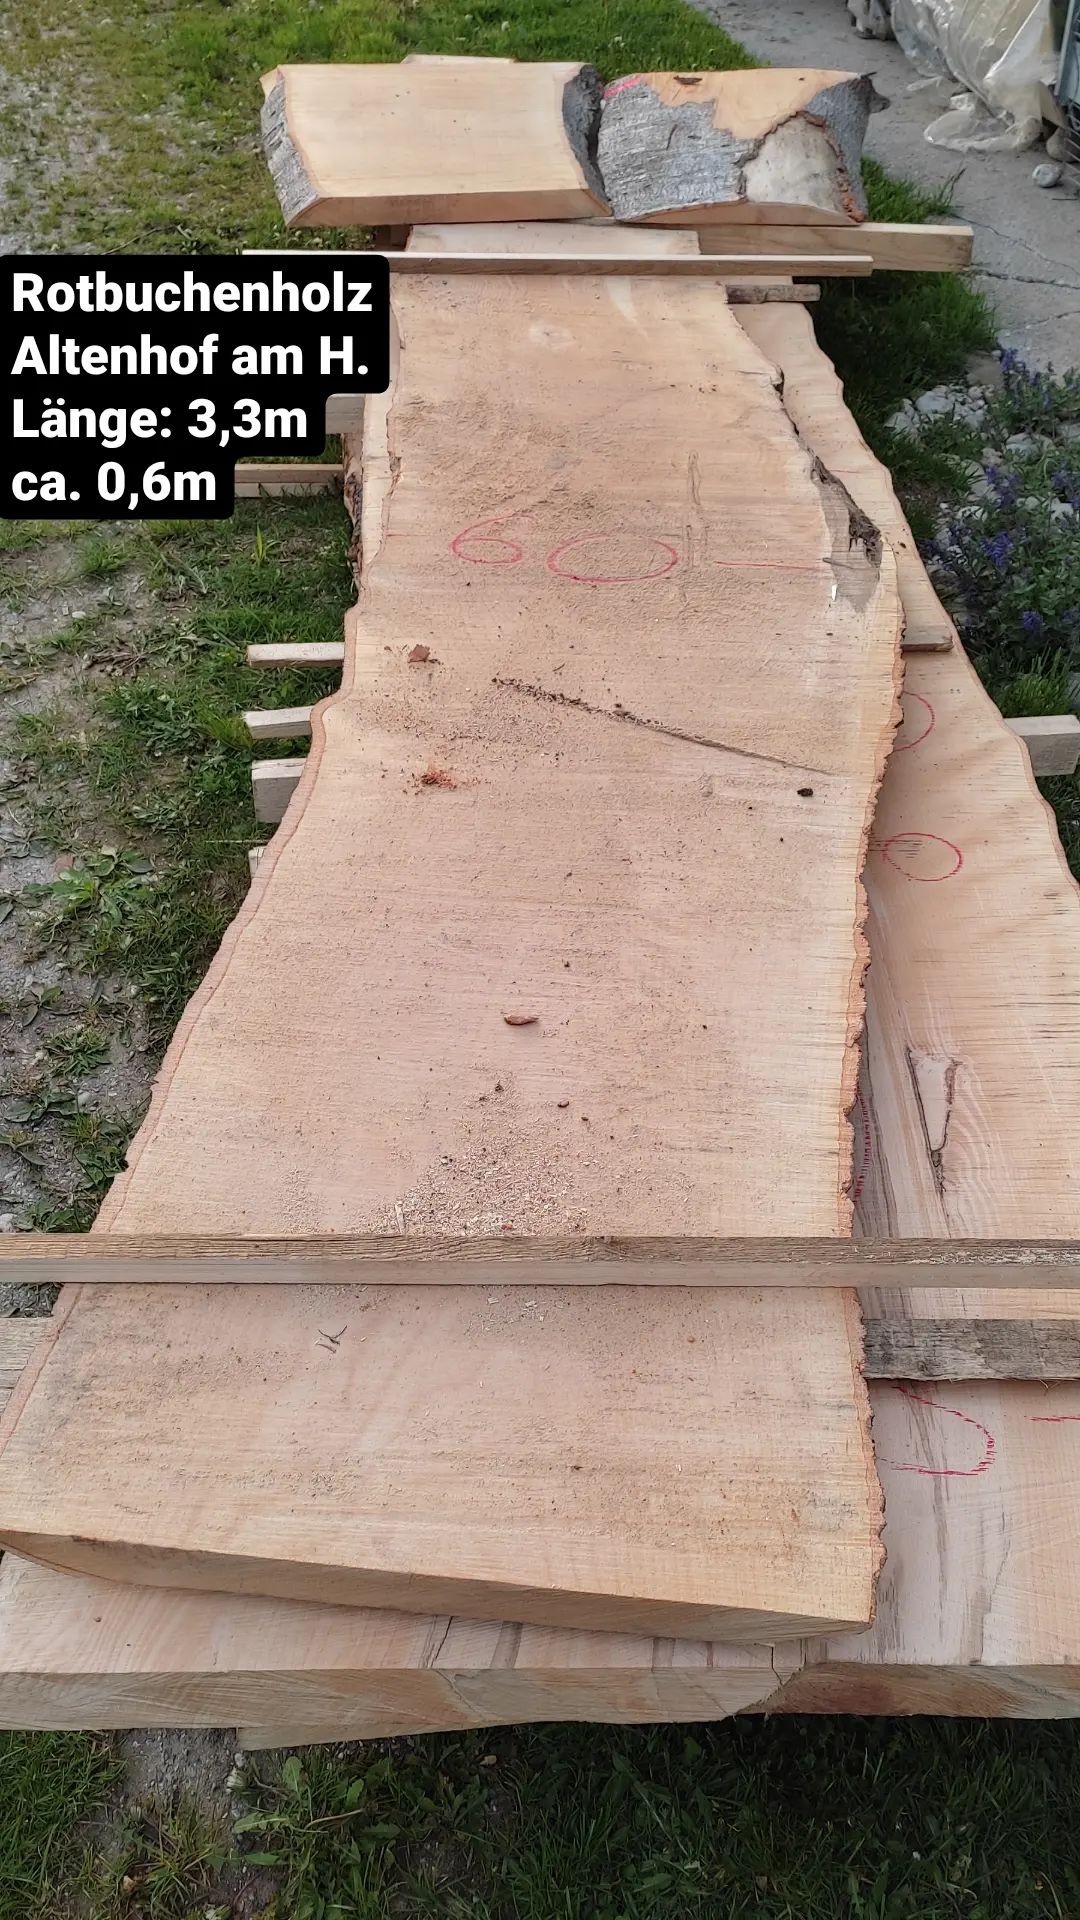 Tischplattenrohling Couchtisch Rotbuchenholz aus Altenhof am Hausruck